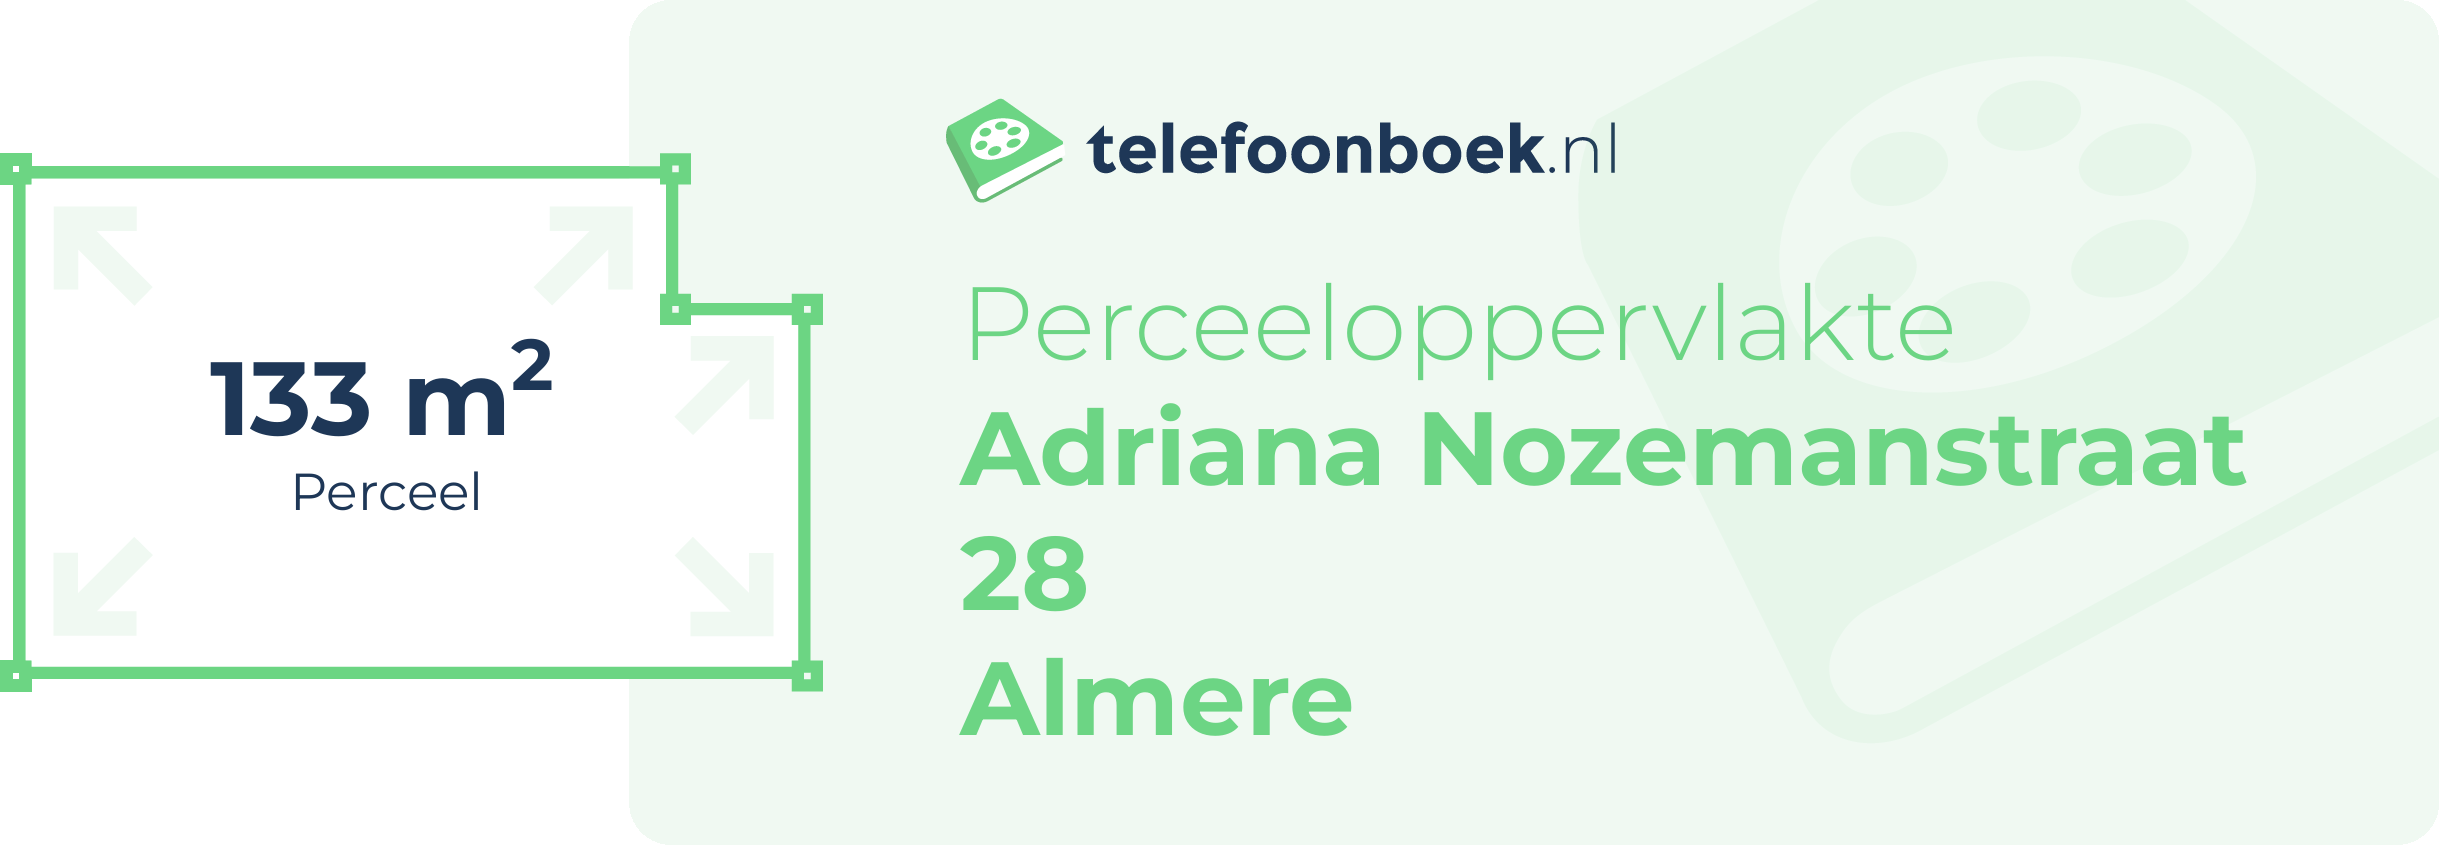 Perceeloppervlakte Adriana Nozemanstraat 28 Almere